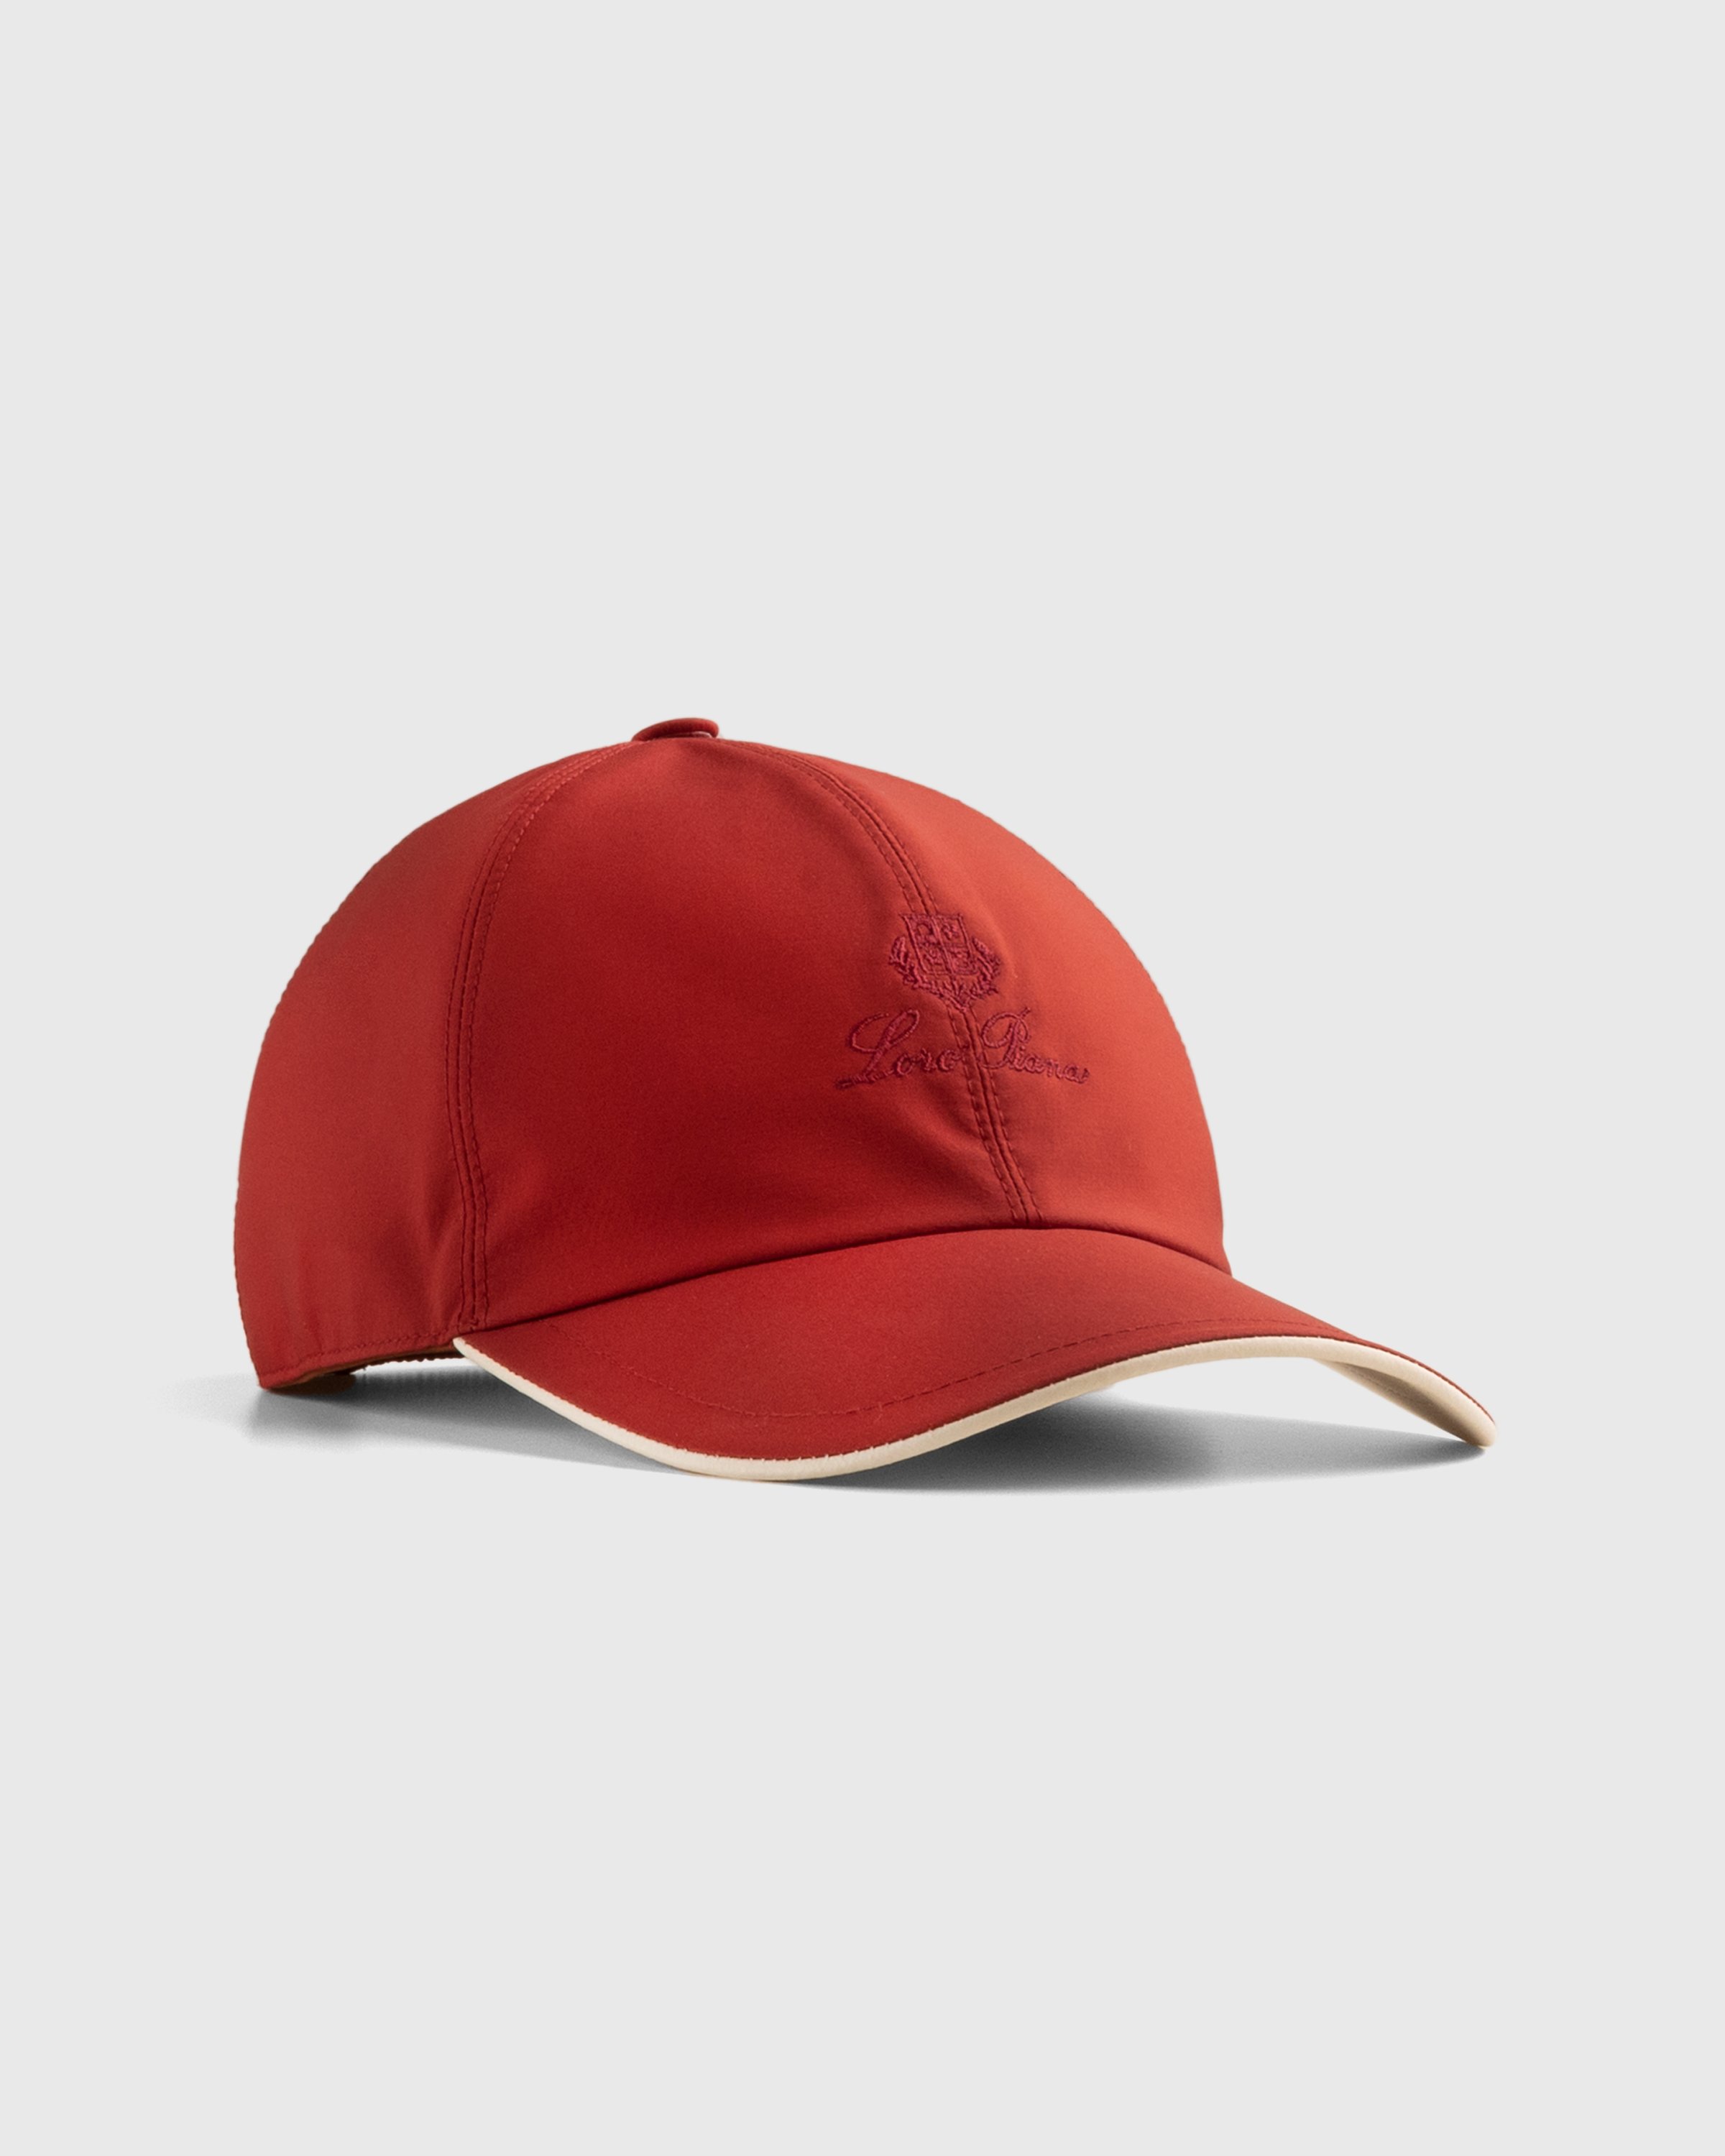 Loro Piana - Bicolor Baseball Cap Hibiscus / Ivory - Accessories - Red - Image 1